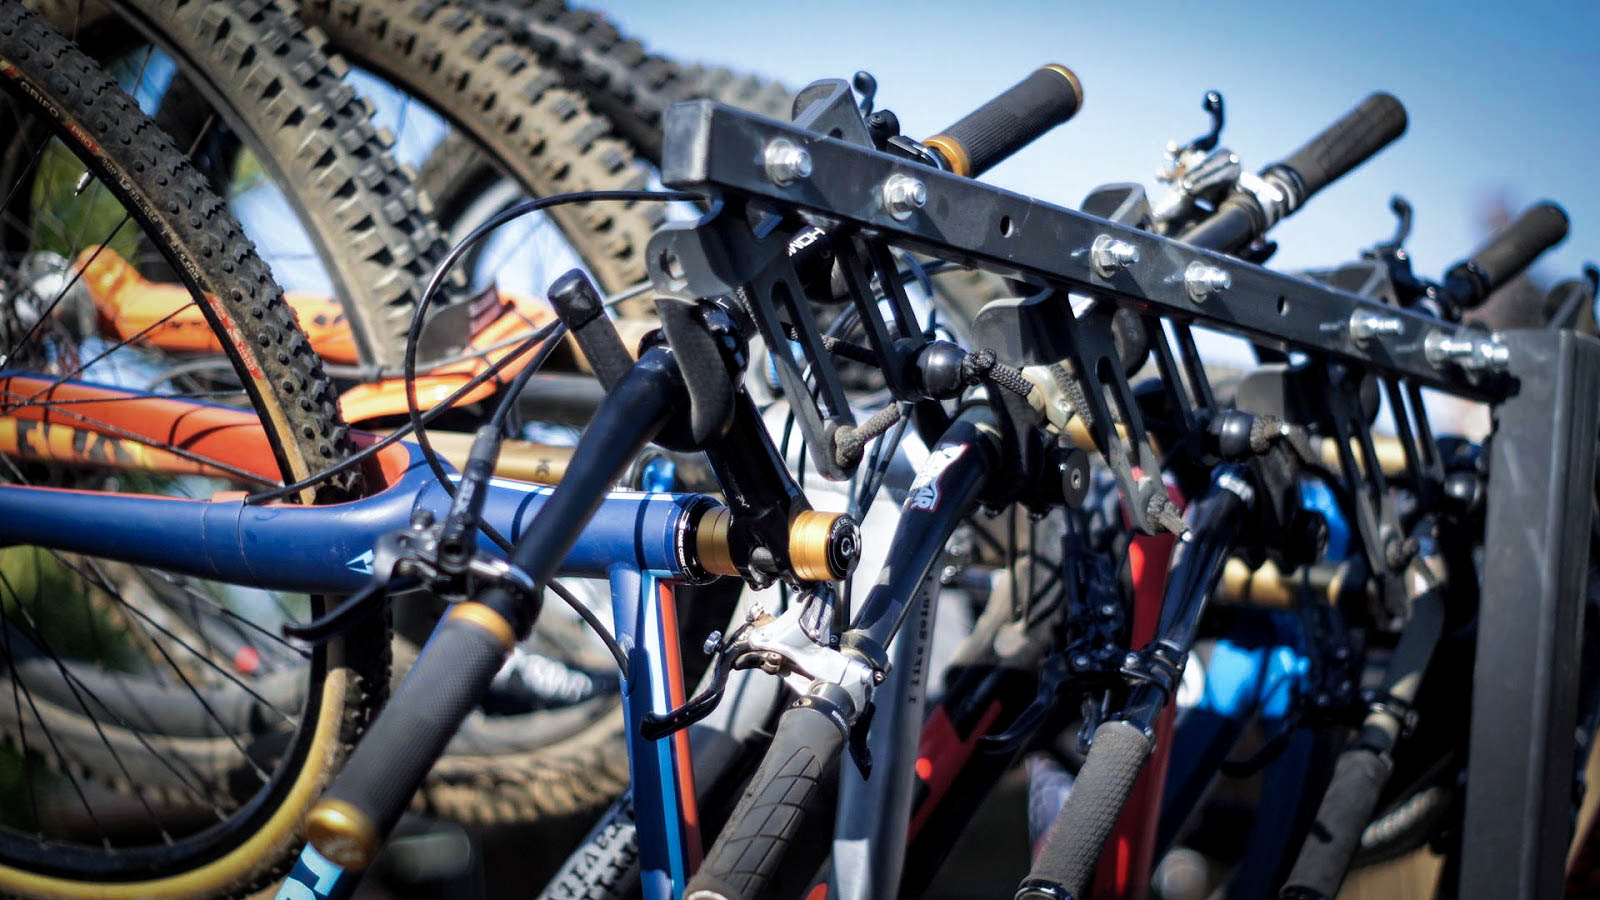 Lolo Racks - American Made Six Pack | Bike Rack Review